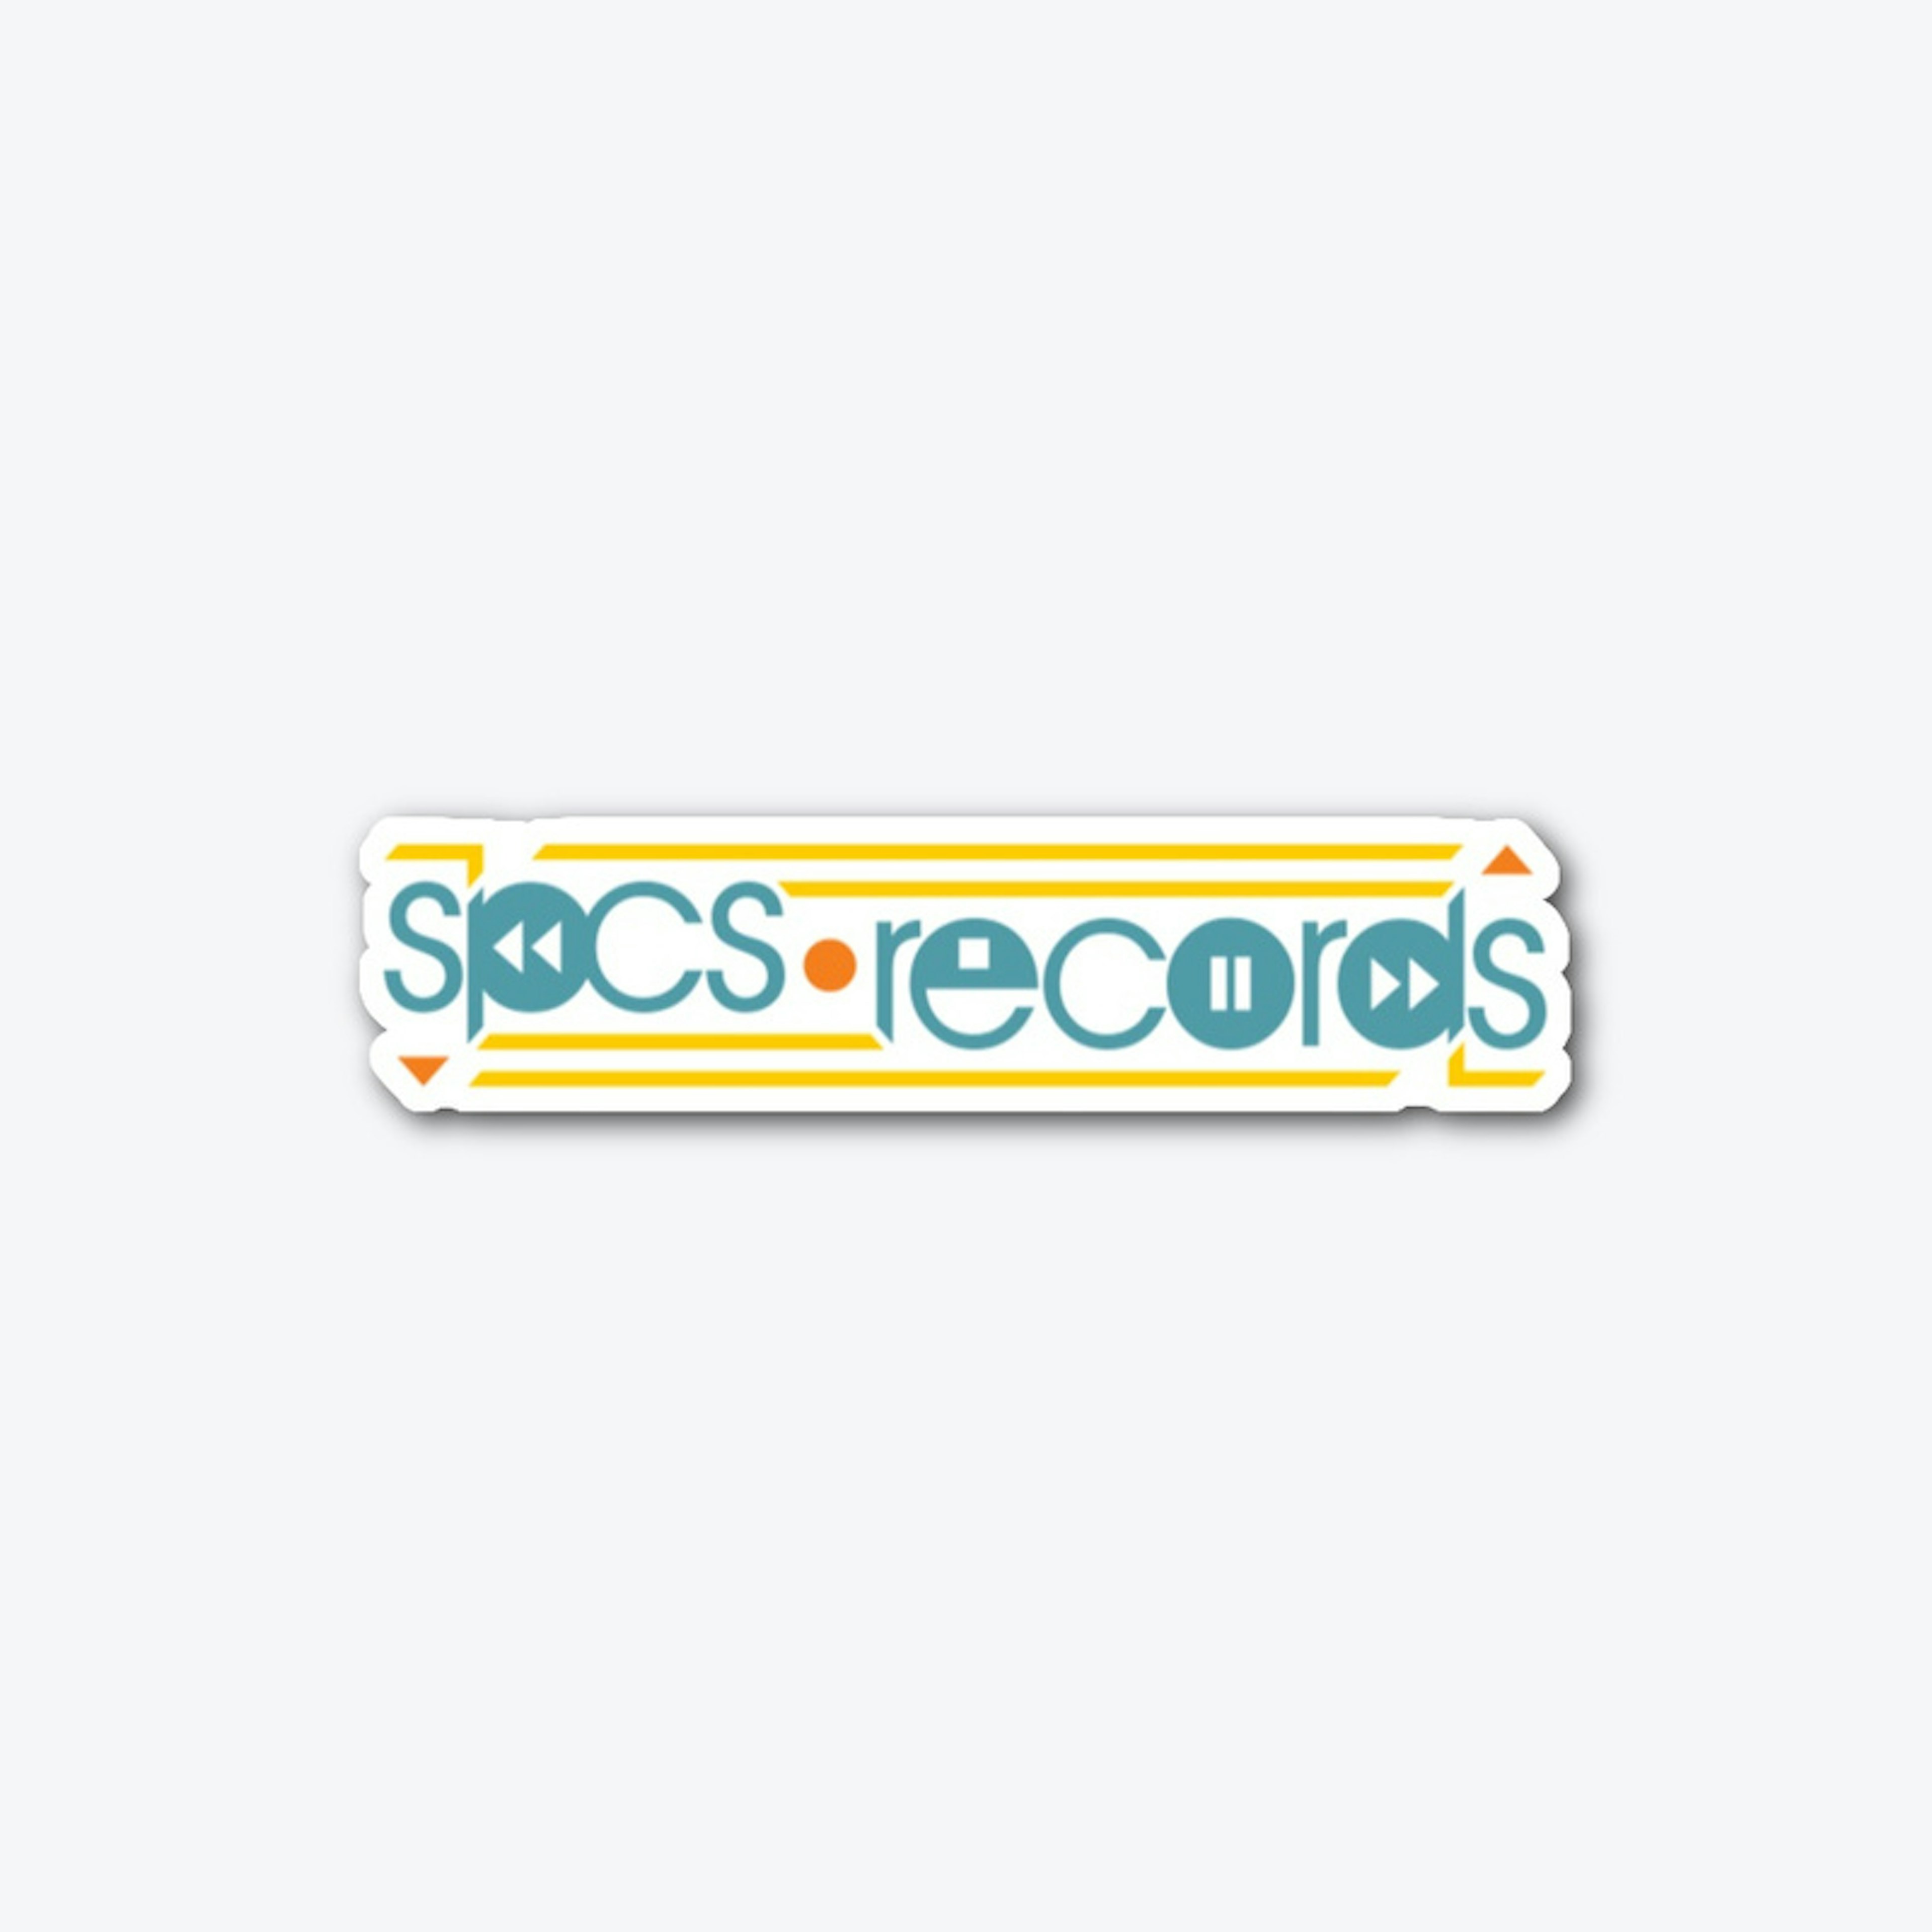 SPCS Records Die Cut Sticker